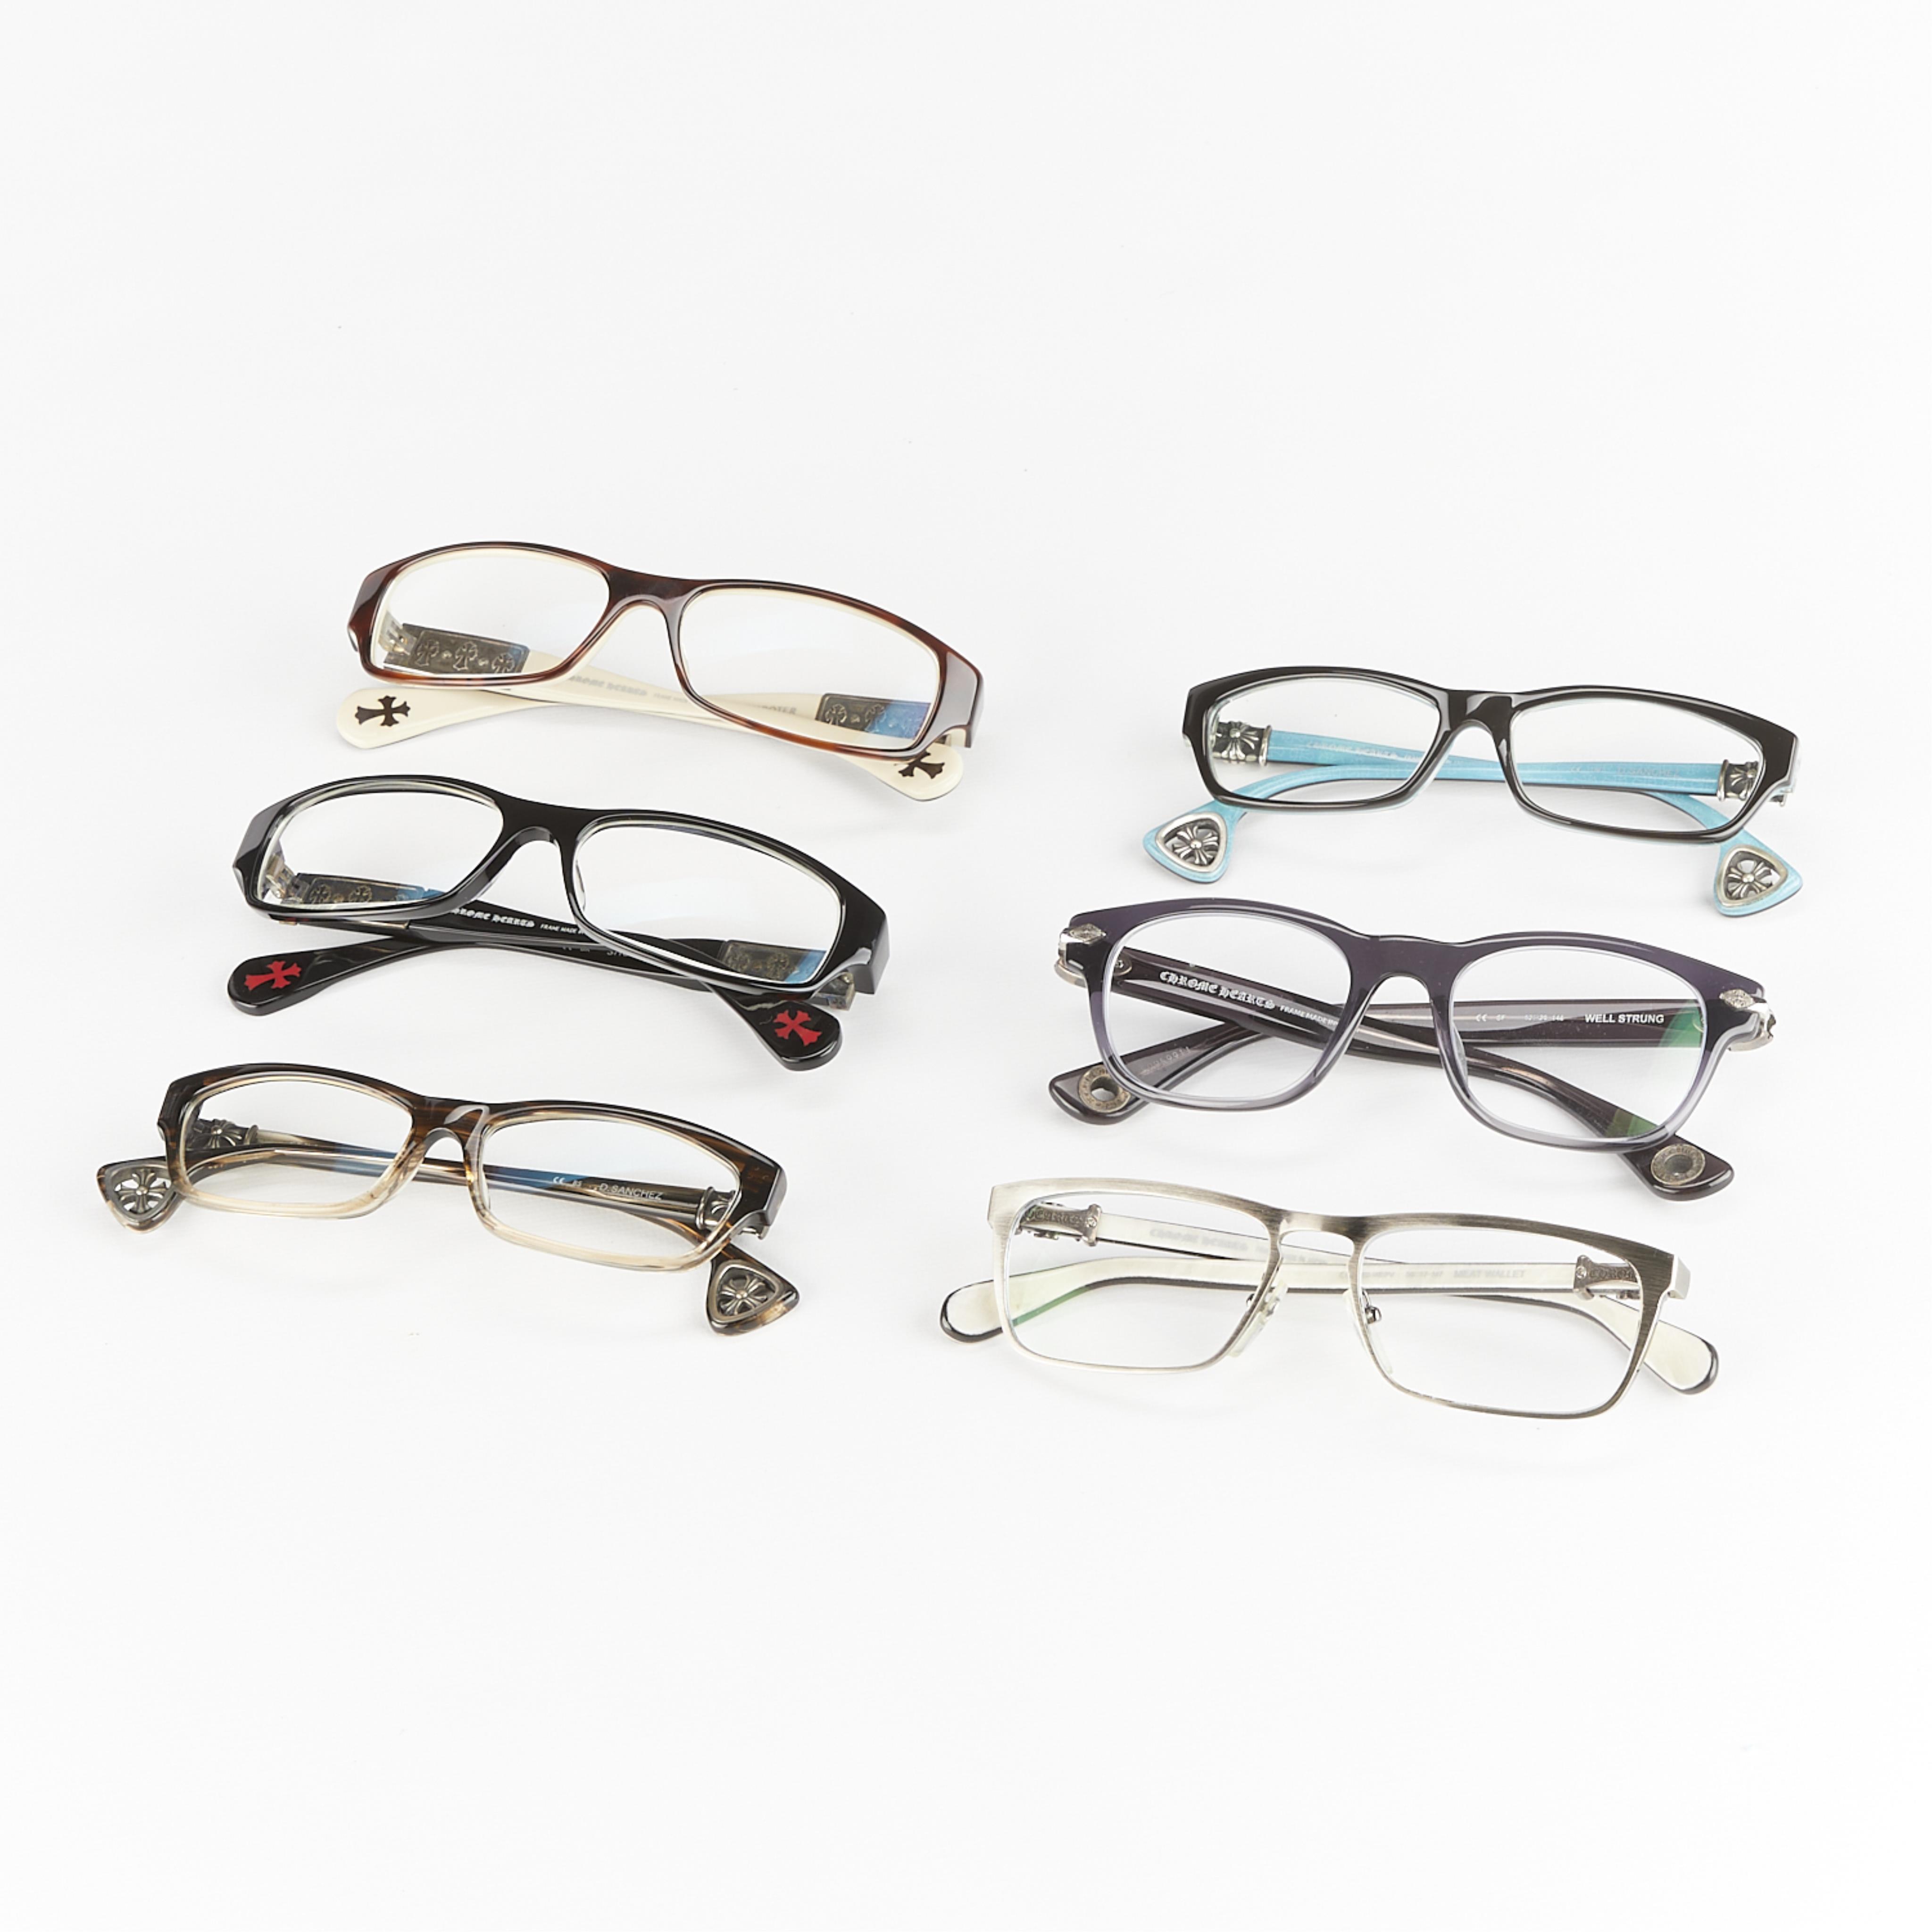 Grp of 6 Chrome Hearts Eyeglasses - Image 3 of 12